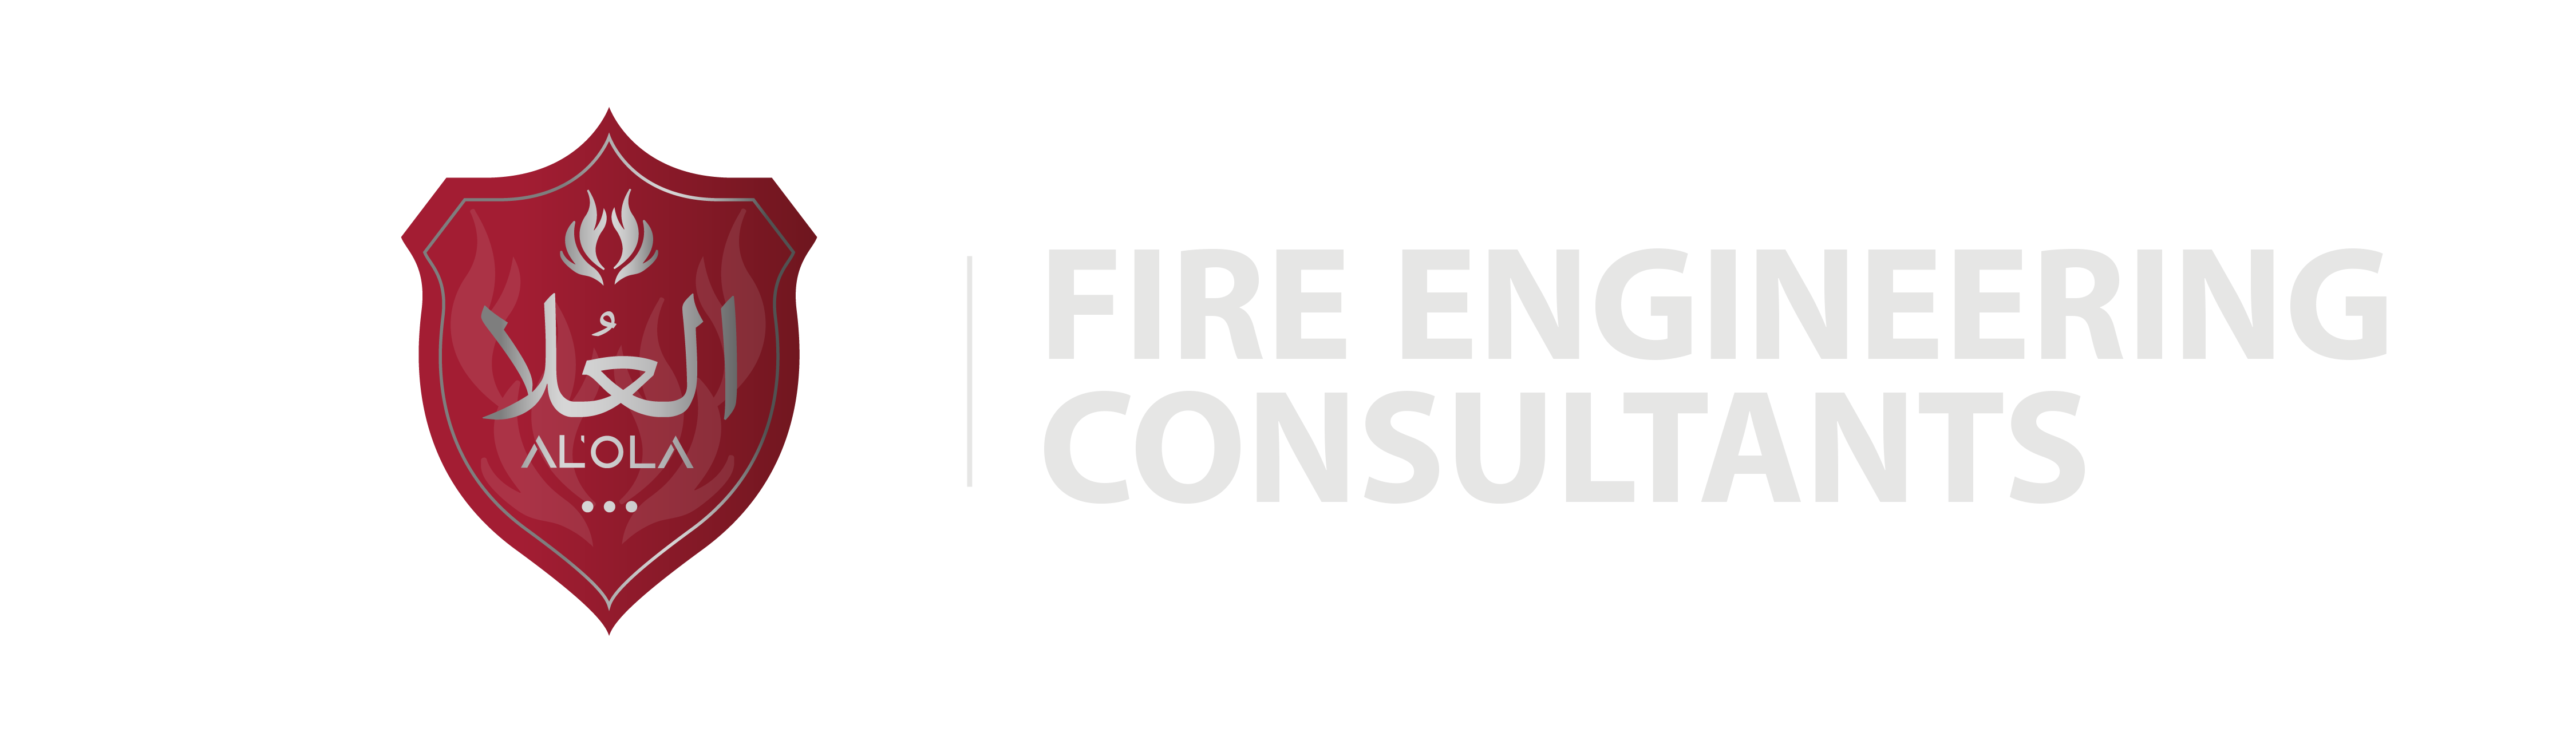 ALOLA FIRE ENGINEERING CONSULTANTS - :: ALOLA FIRE ENGINEERING CONSULTANTS ::